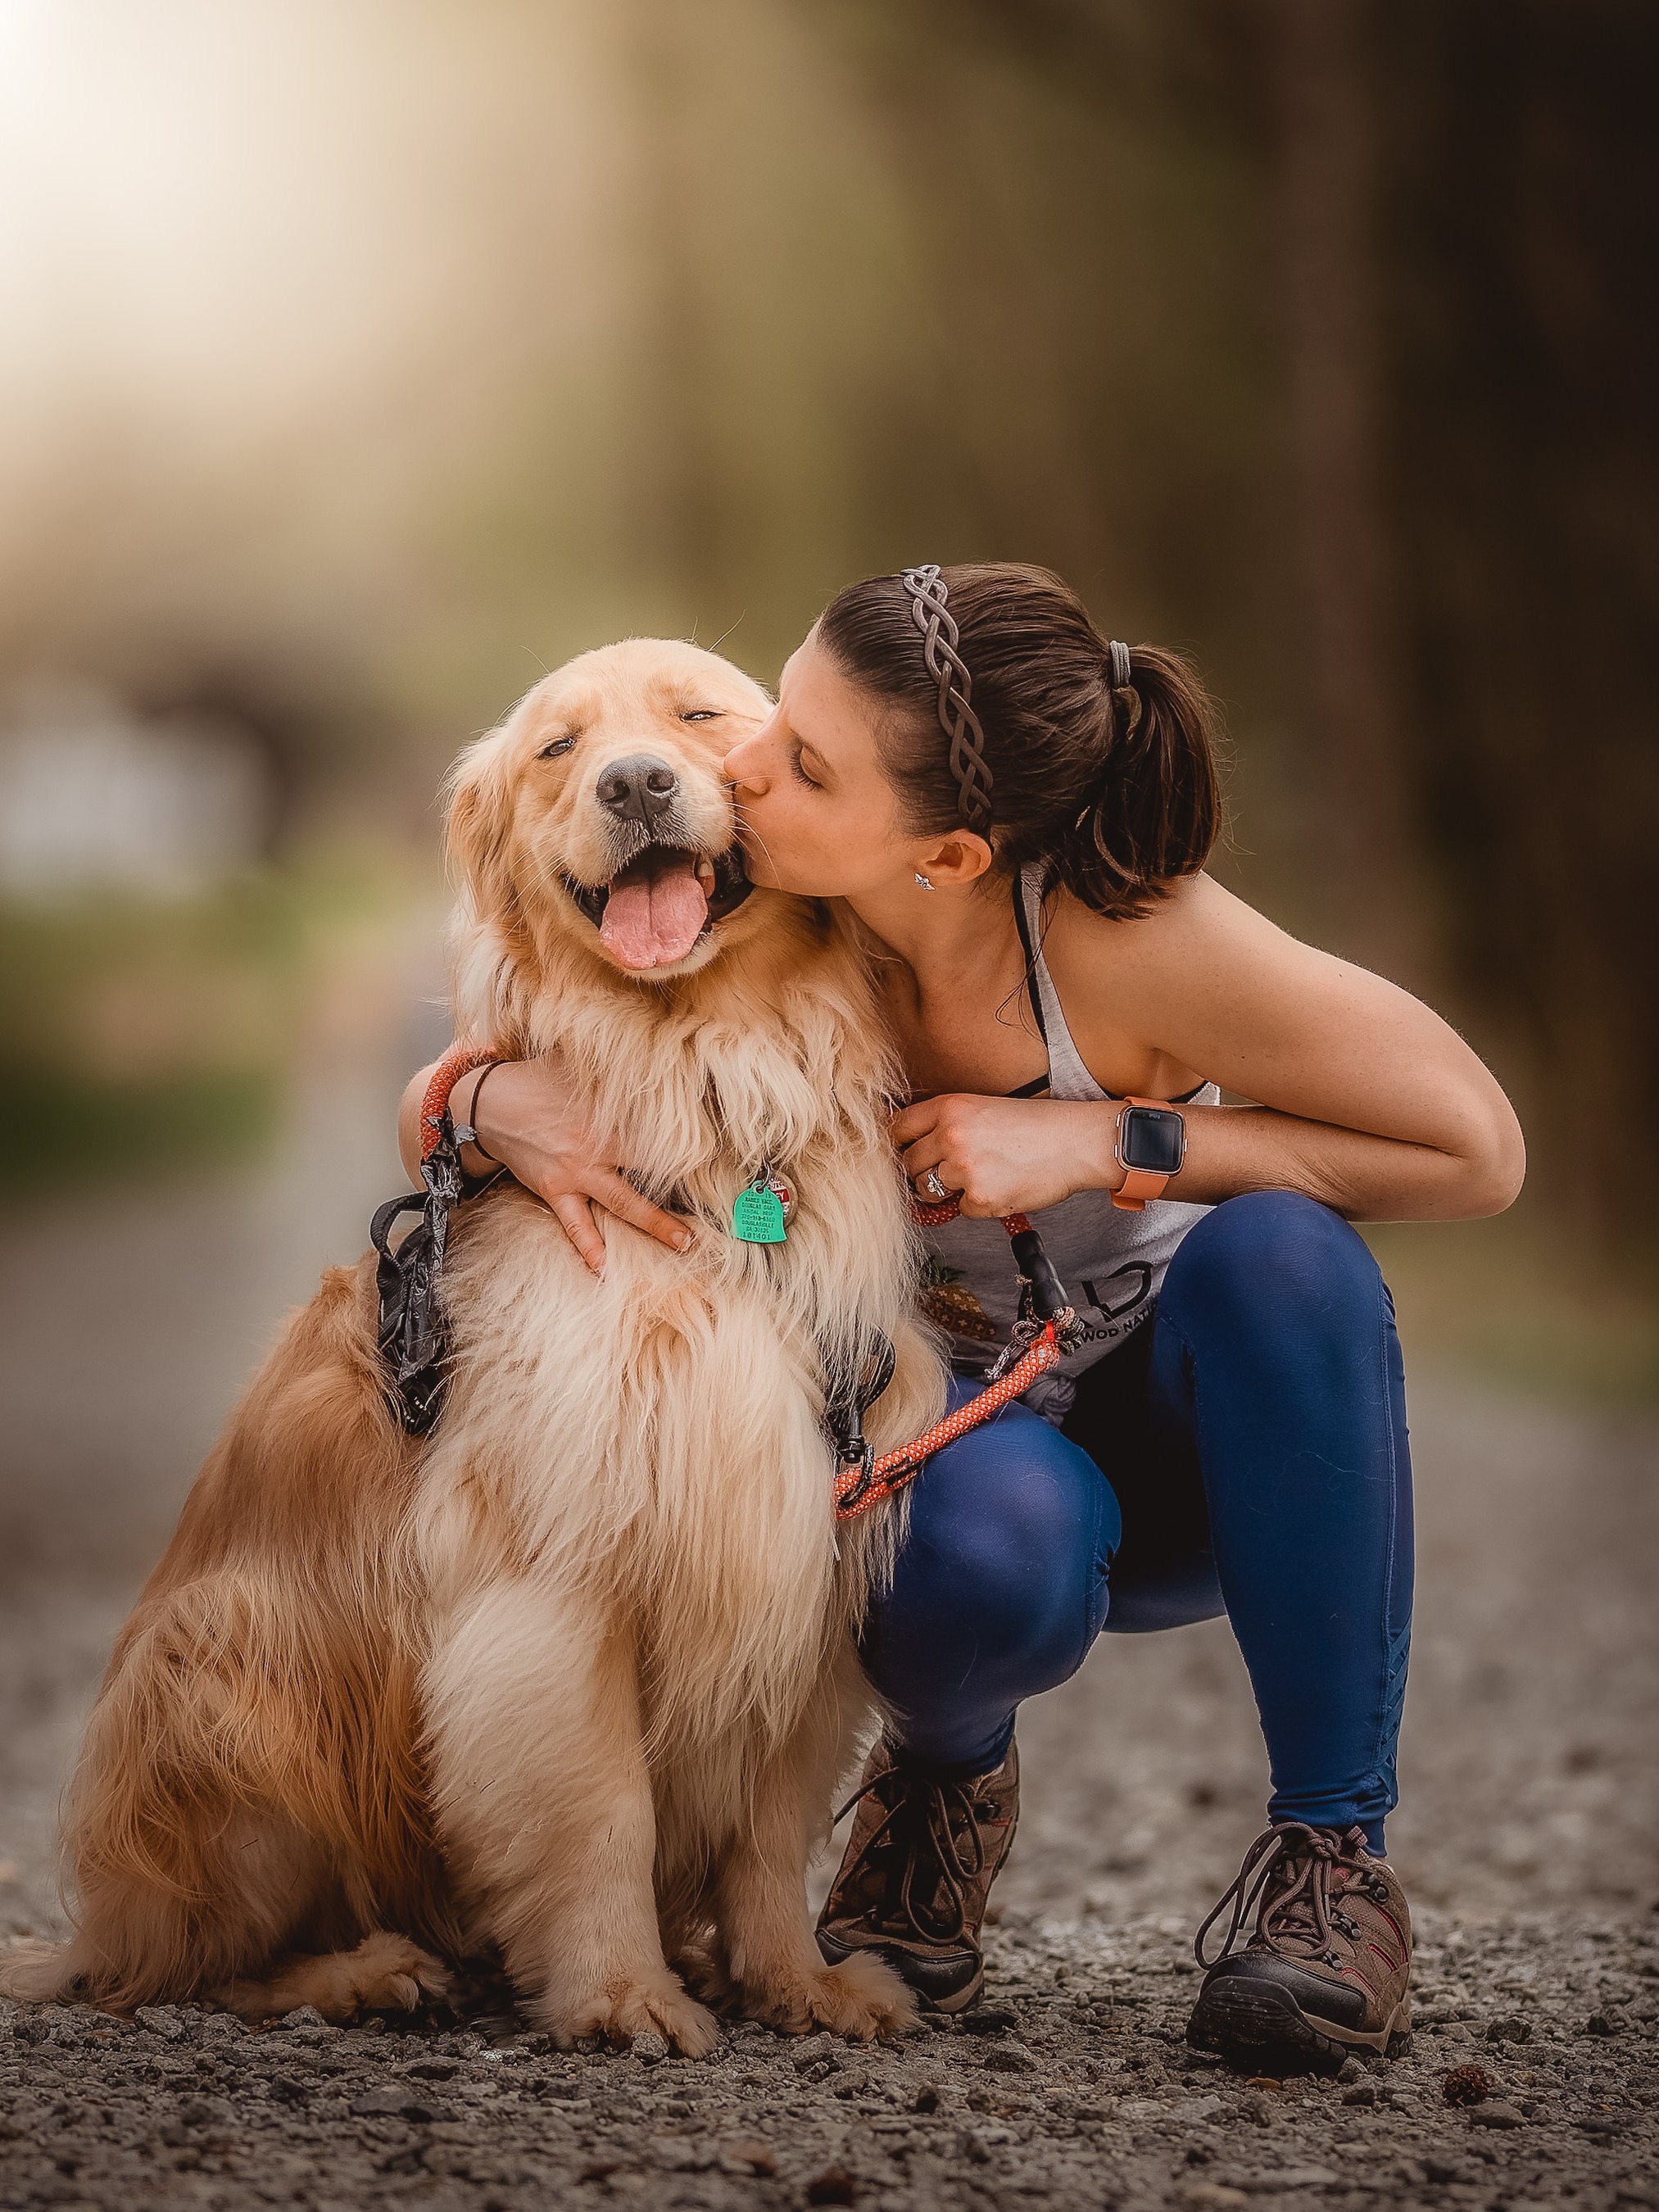 5 Amazing Benefits Of Hugging Your Dog